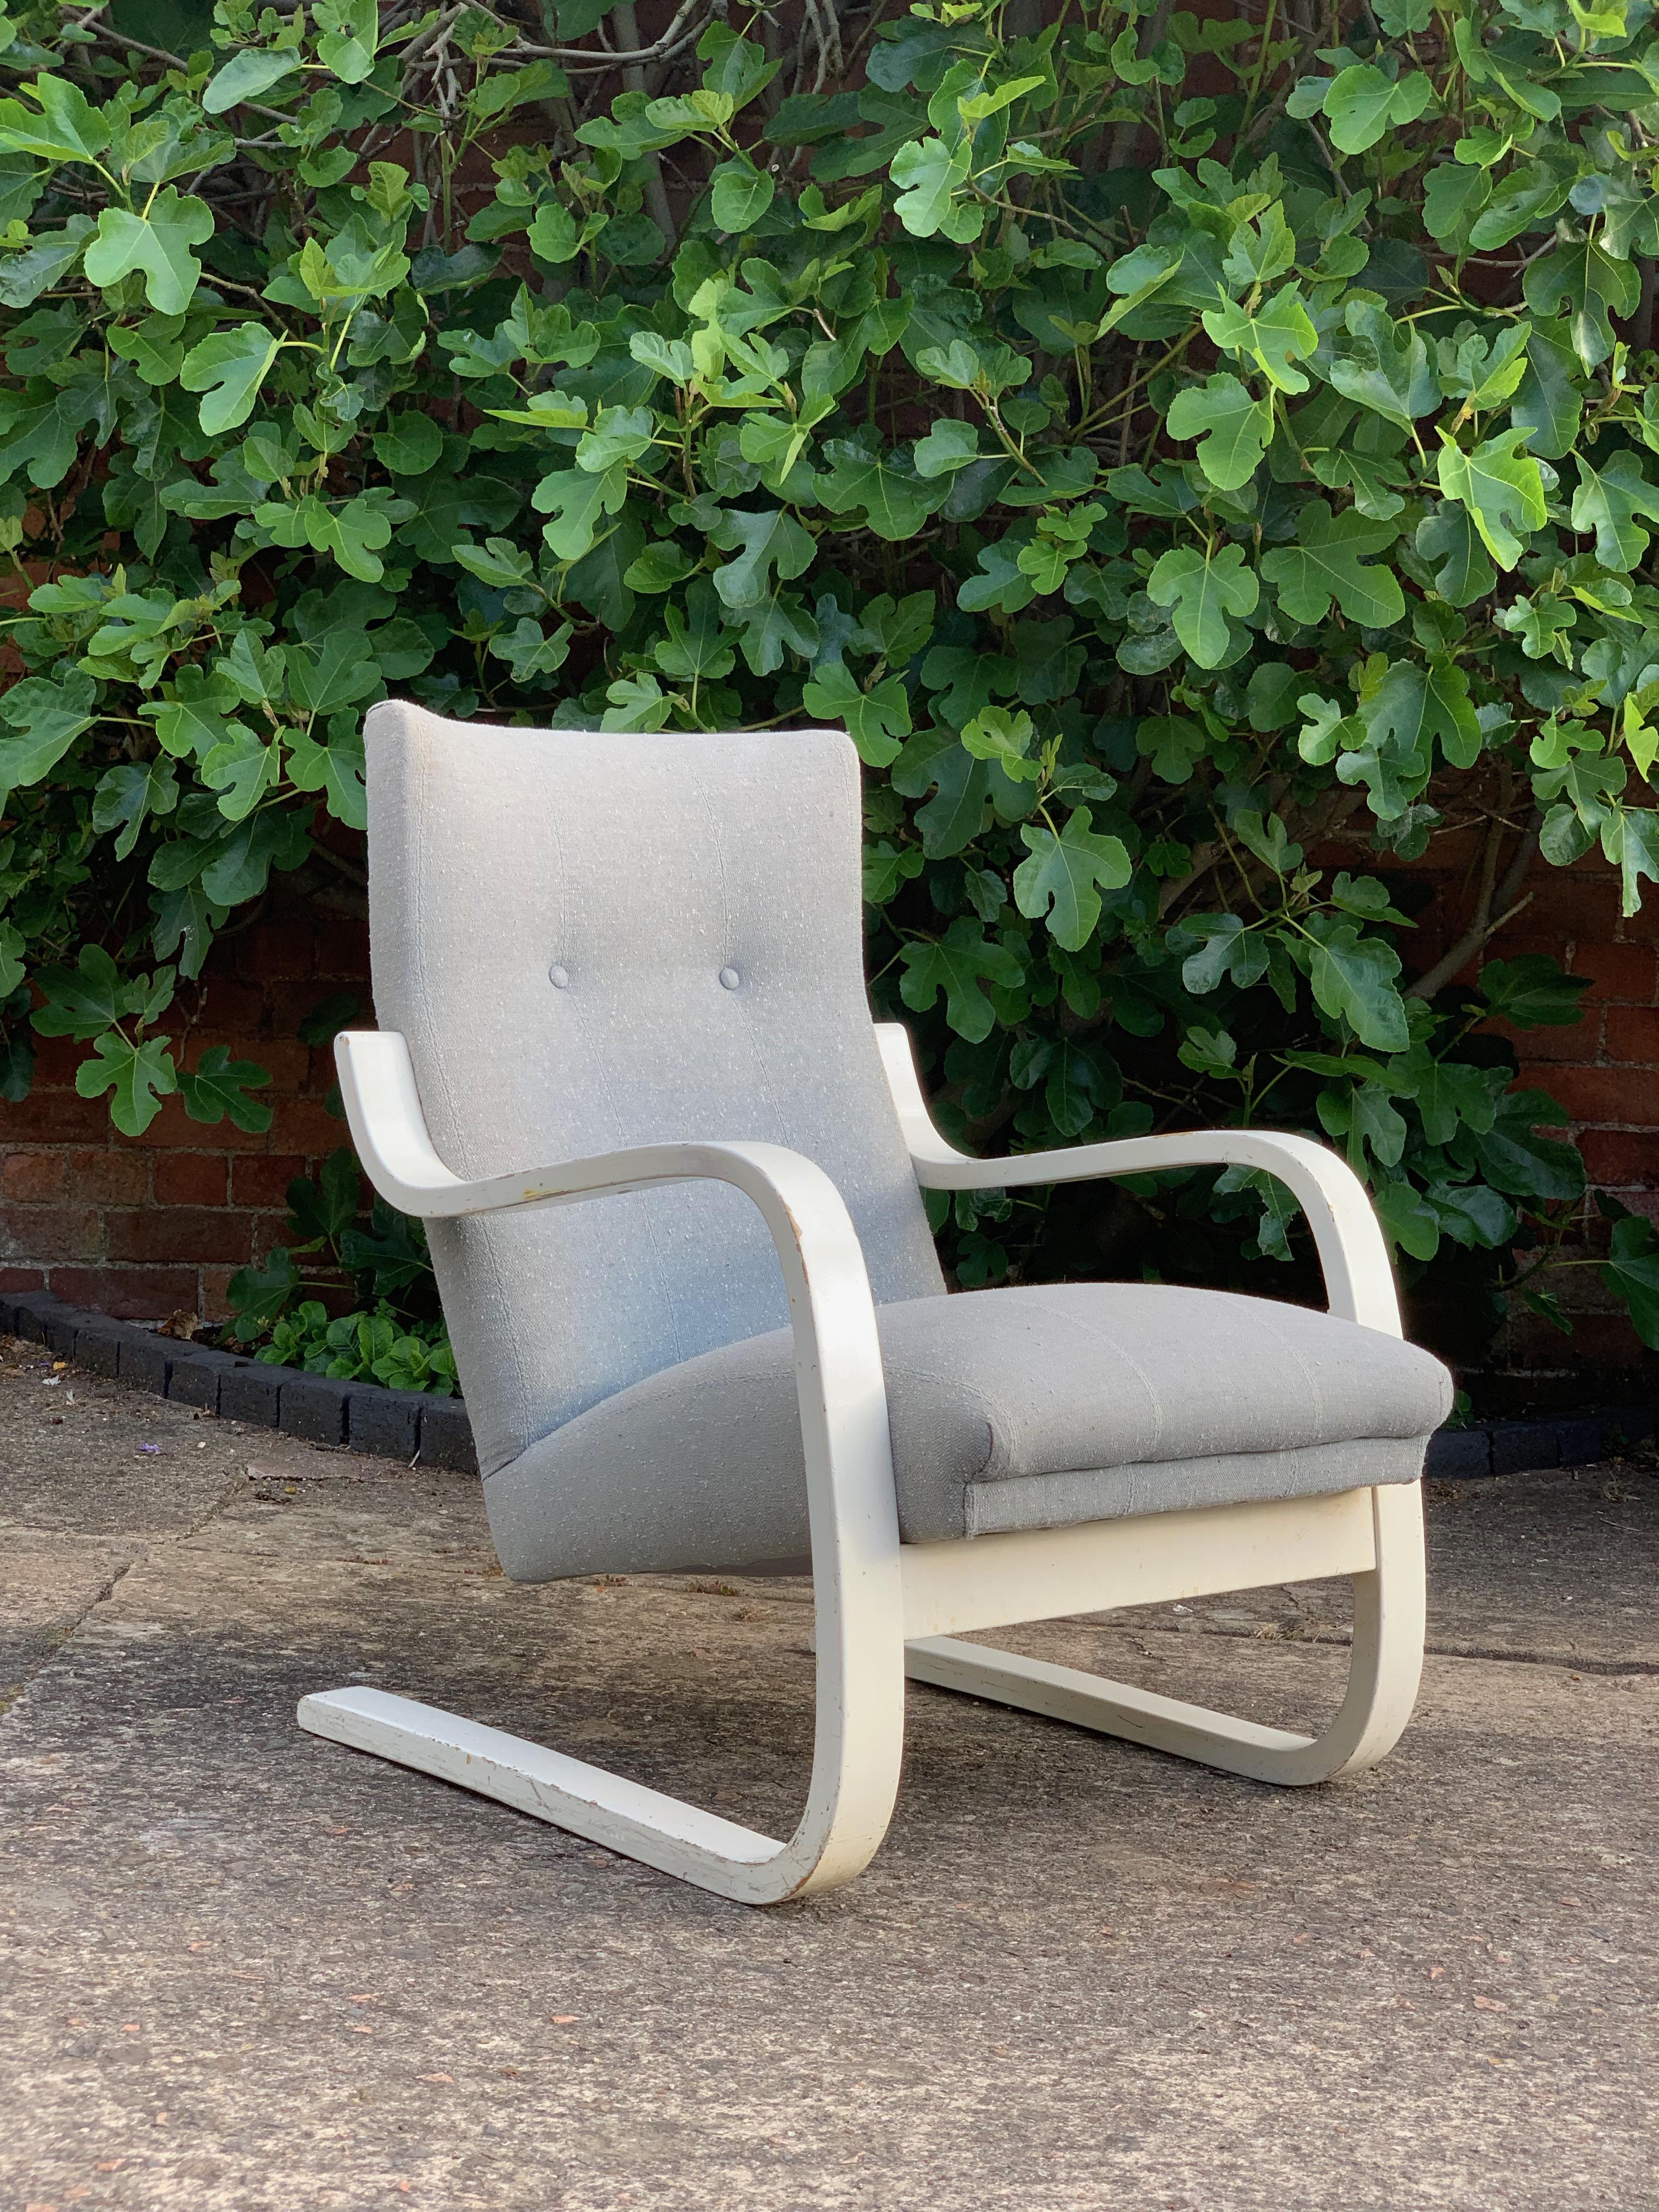 Birch Alvar Aalto Model 401 Lounge Chair Armchair by Artek, circa 1938